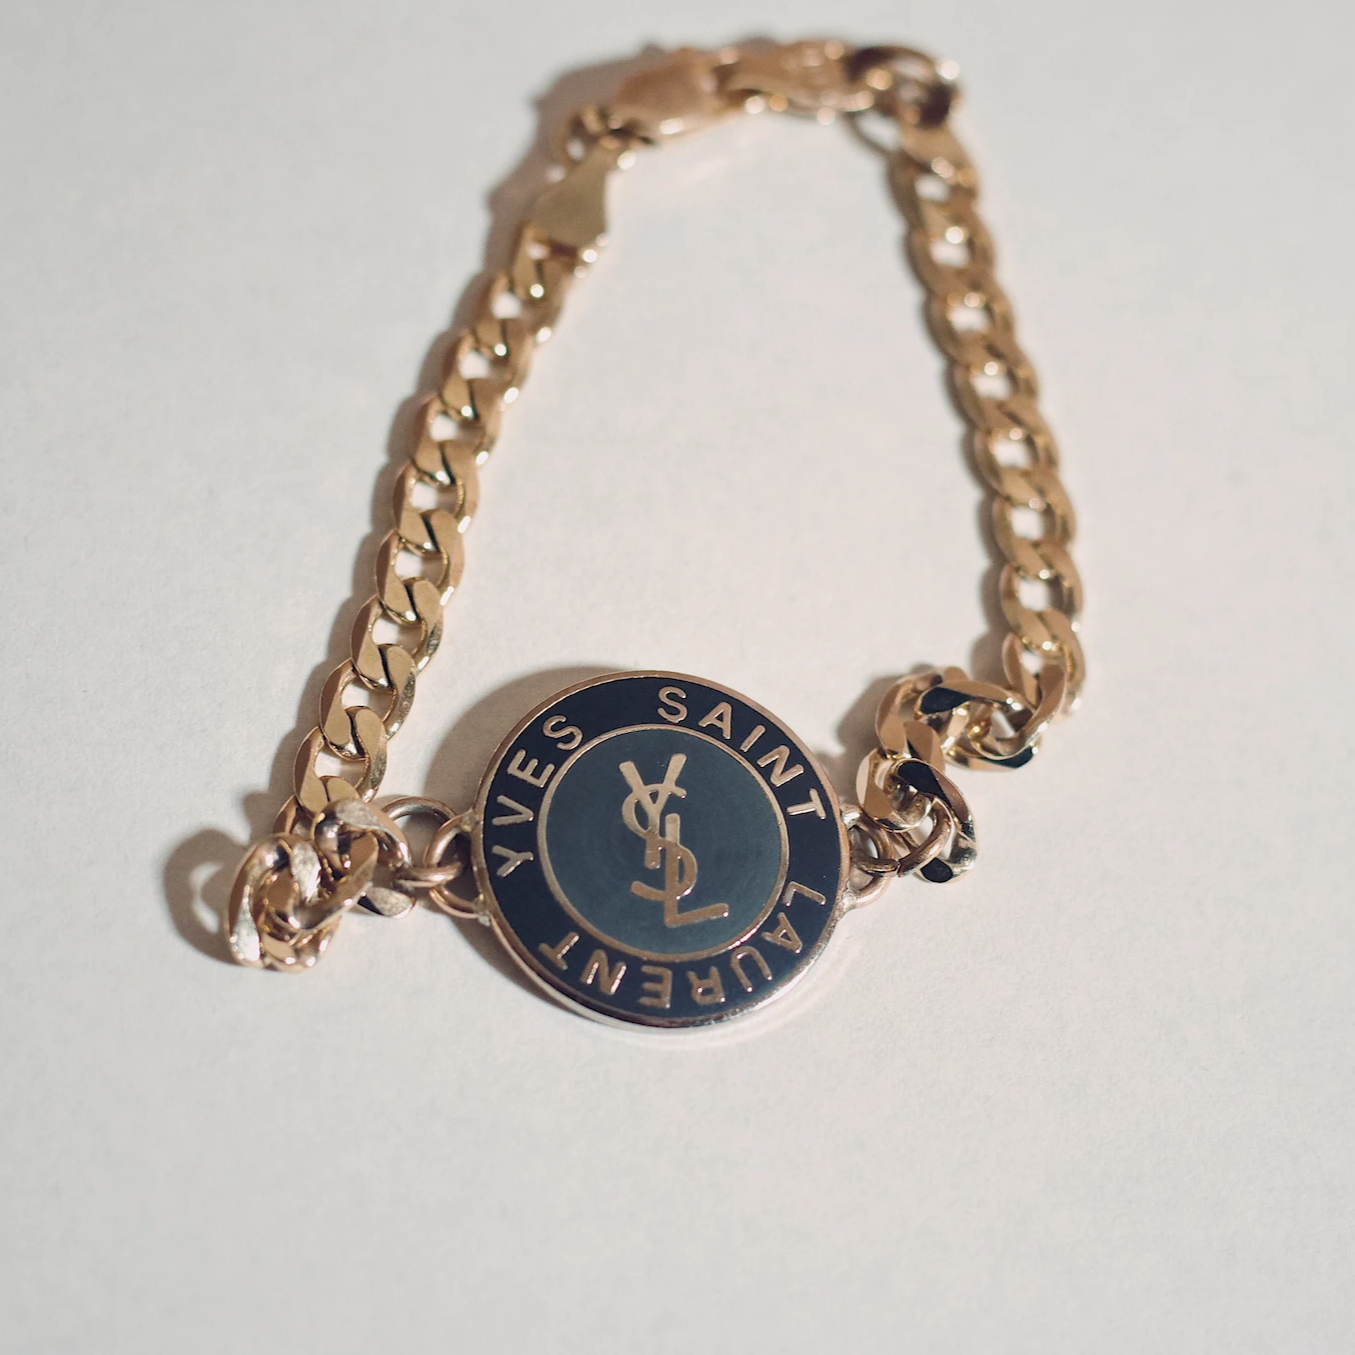 100% Authentic Vintage Repurposed YSL Large Charm Bracelet